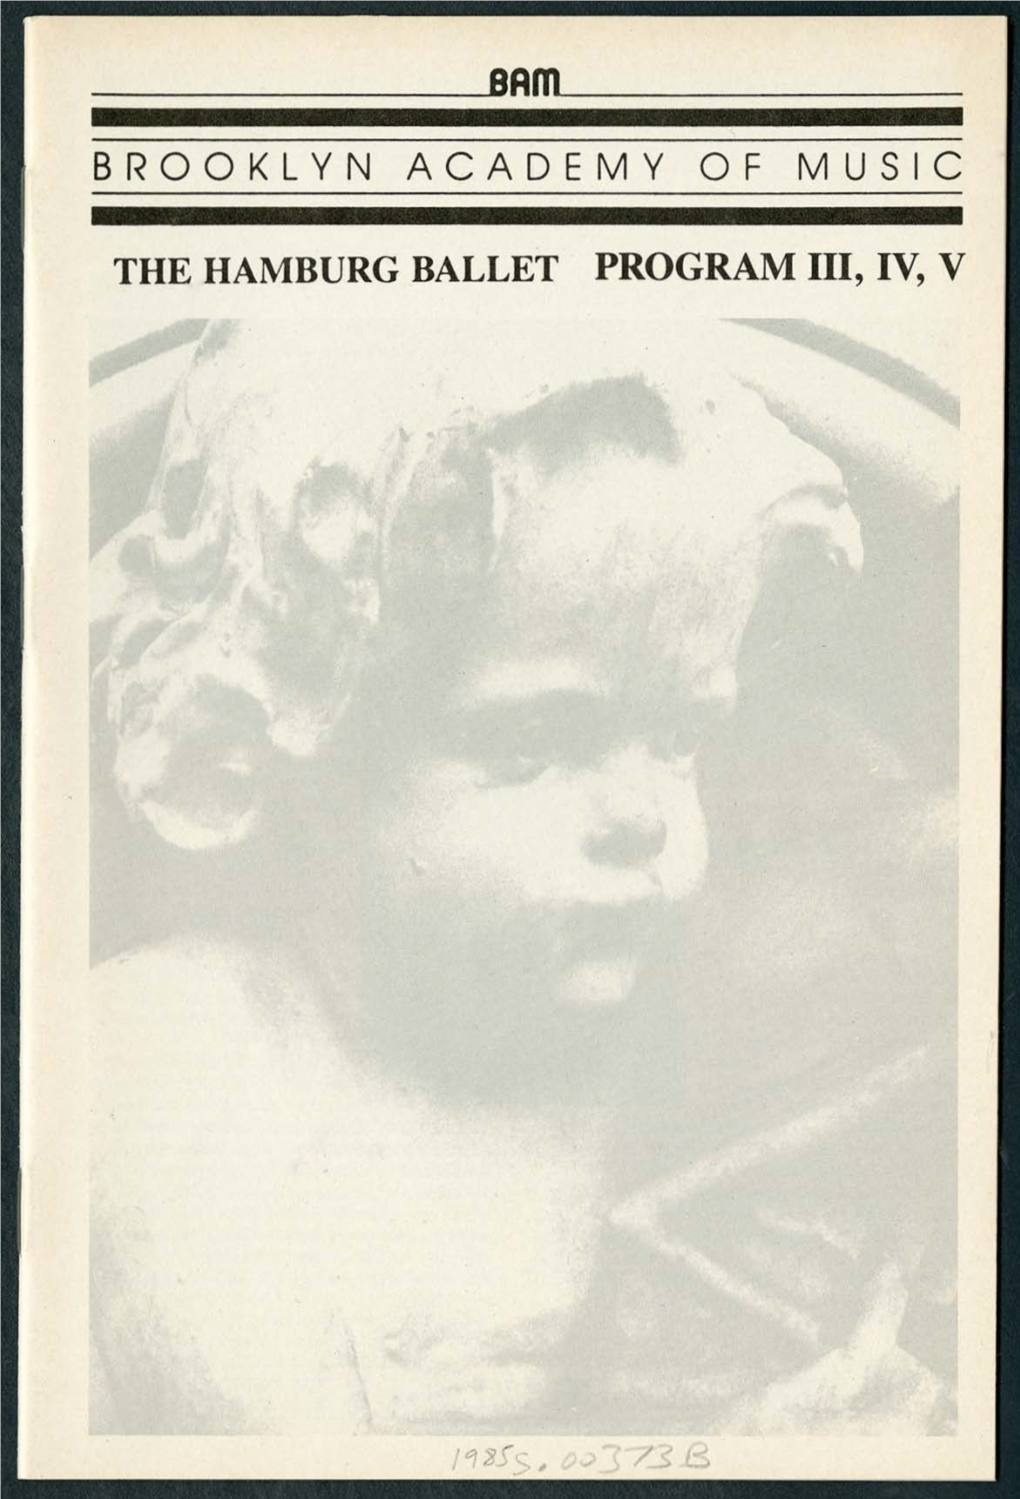 THE HAMBURG BALLET PROGRAM III, IV, V IACCEPT the CHALLENGE! I BOA Hon